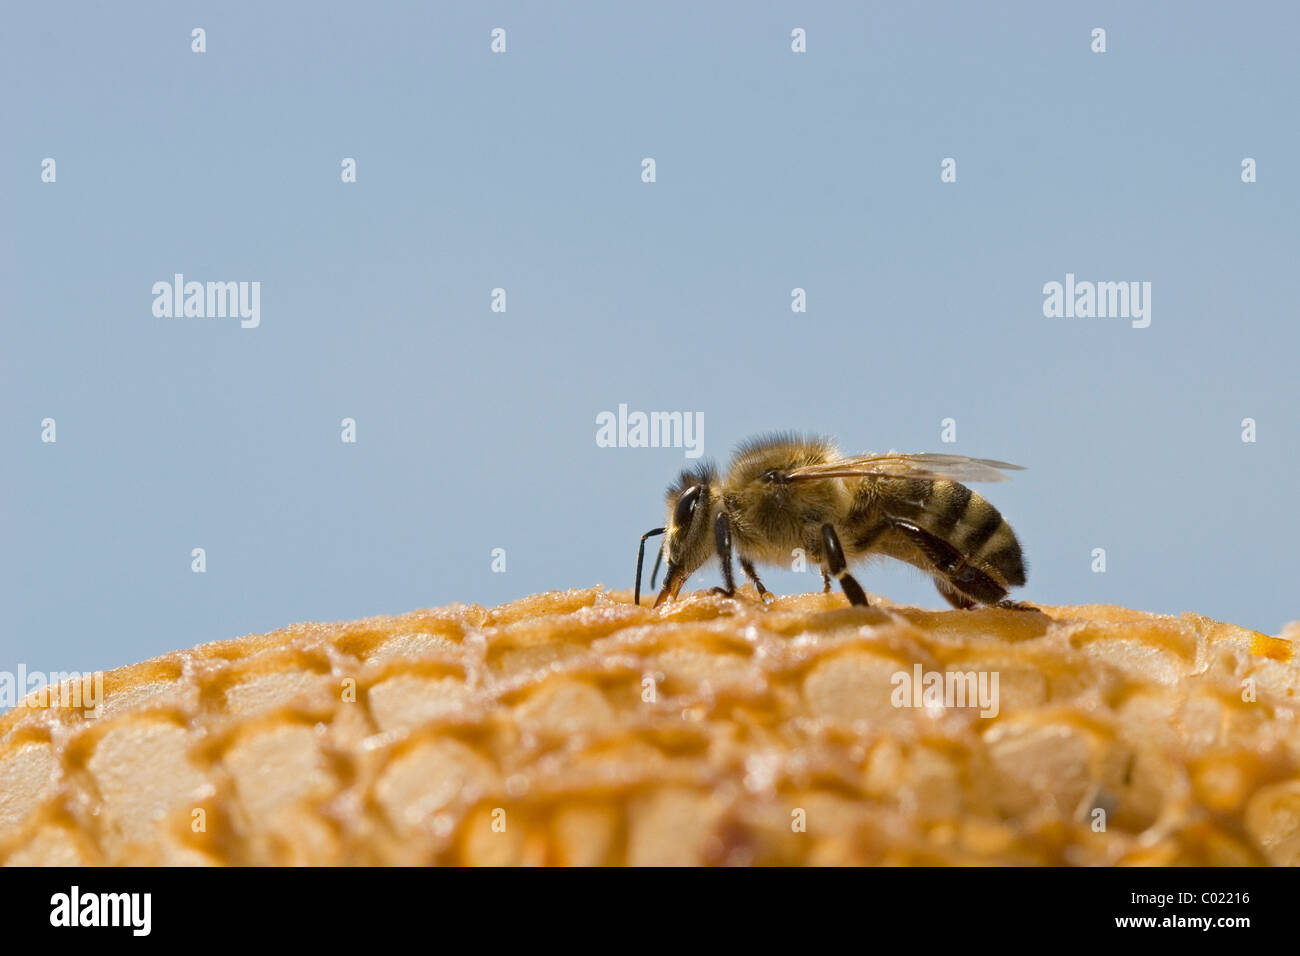 Honeybee on a comb Stock Photo